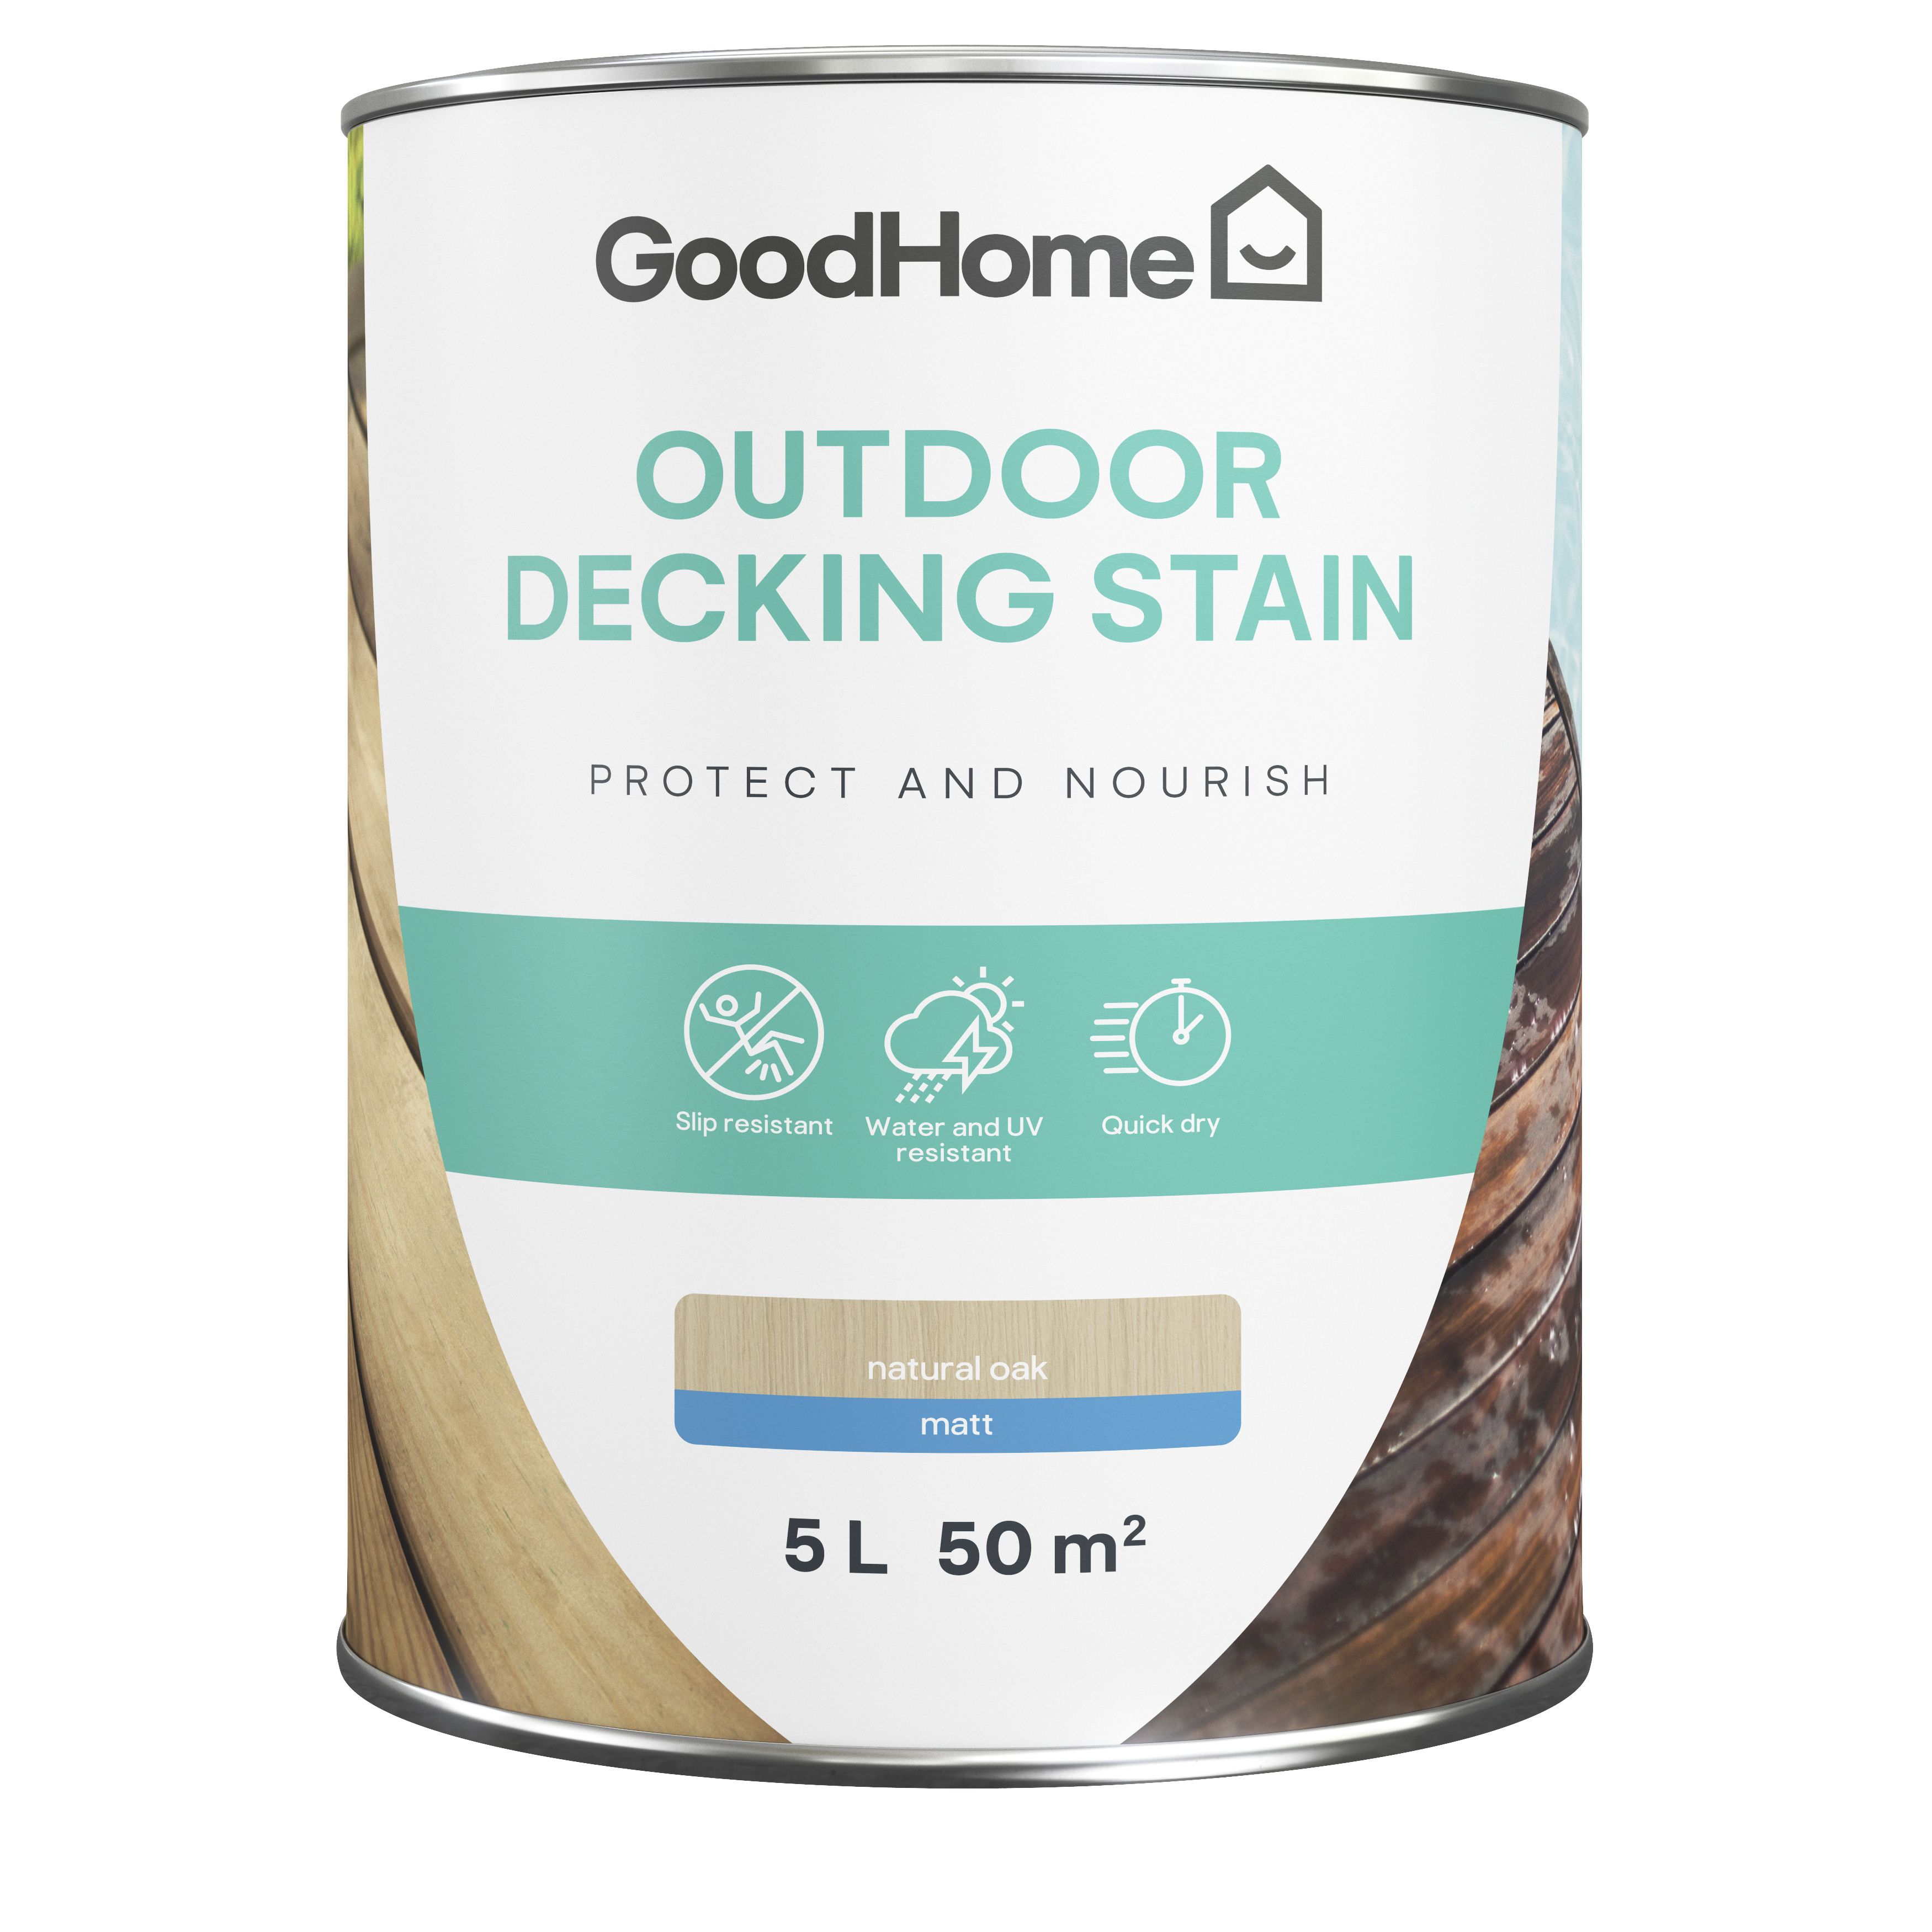 GoodHome Natural oak Matt Quick dry Decking Wood stain, 5L